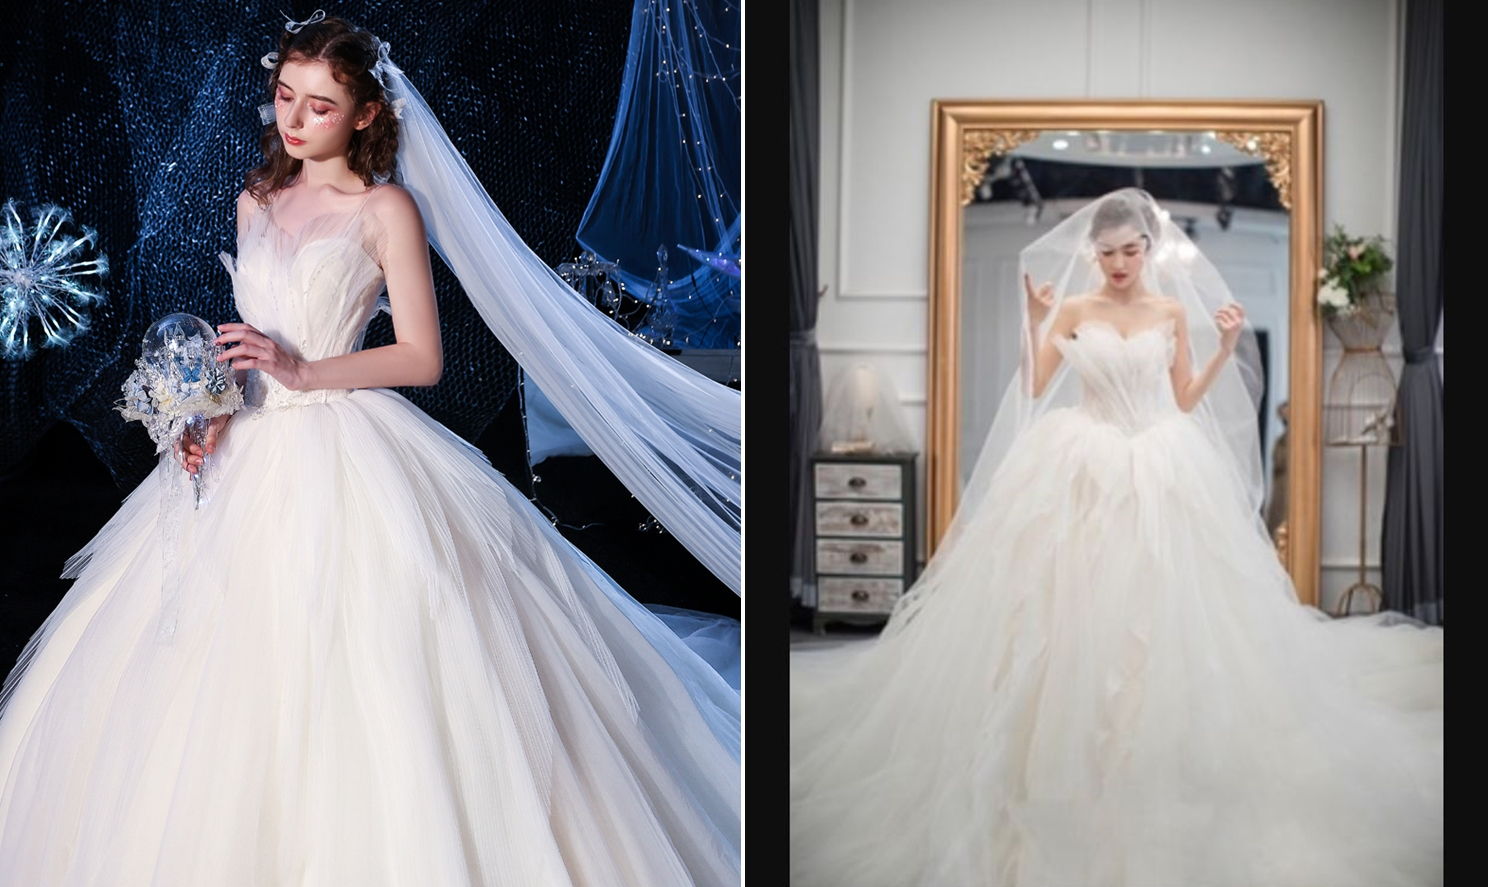 Taobao wedding gown